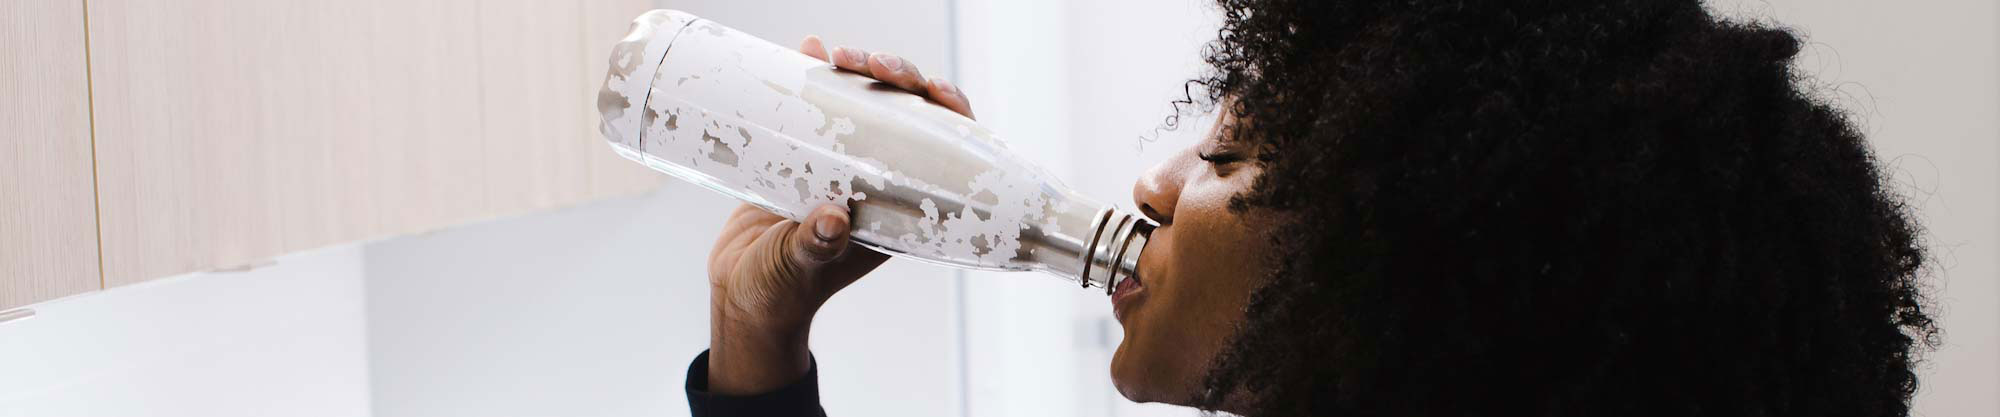 Woman drinking water from a metallic bottle